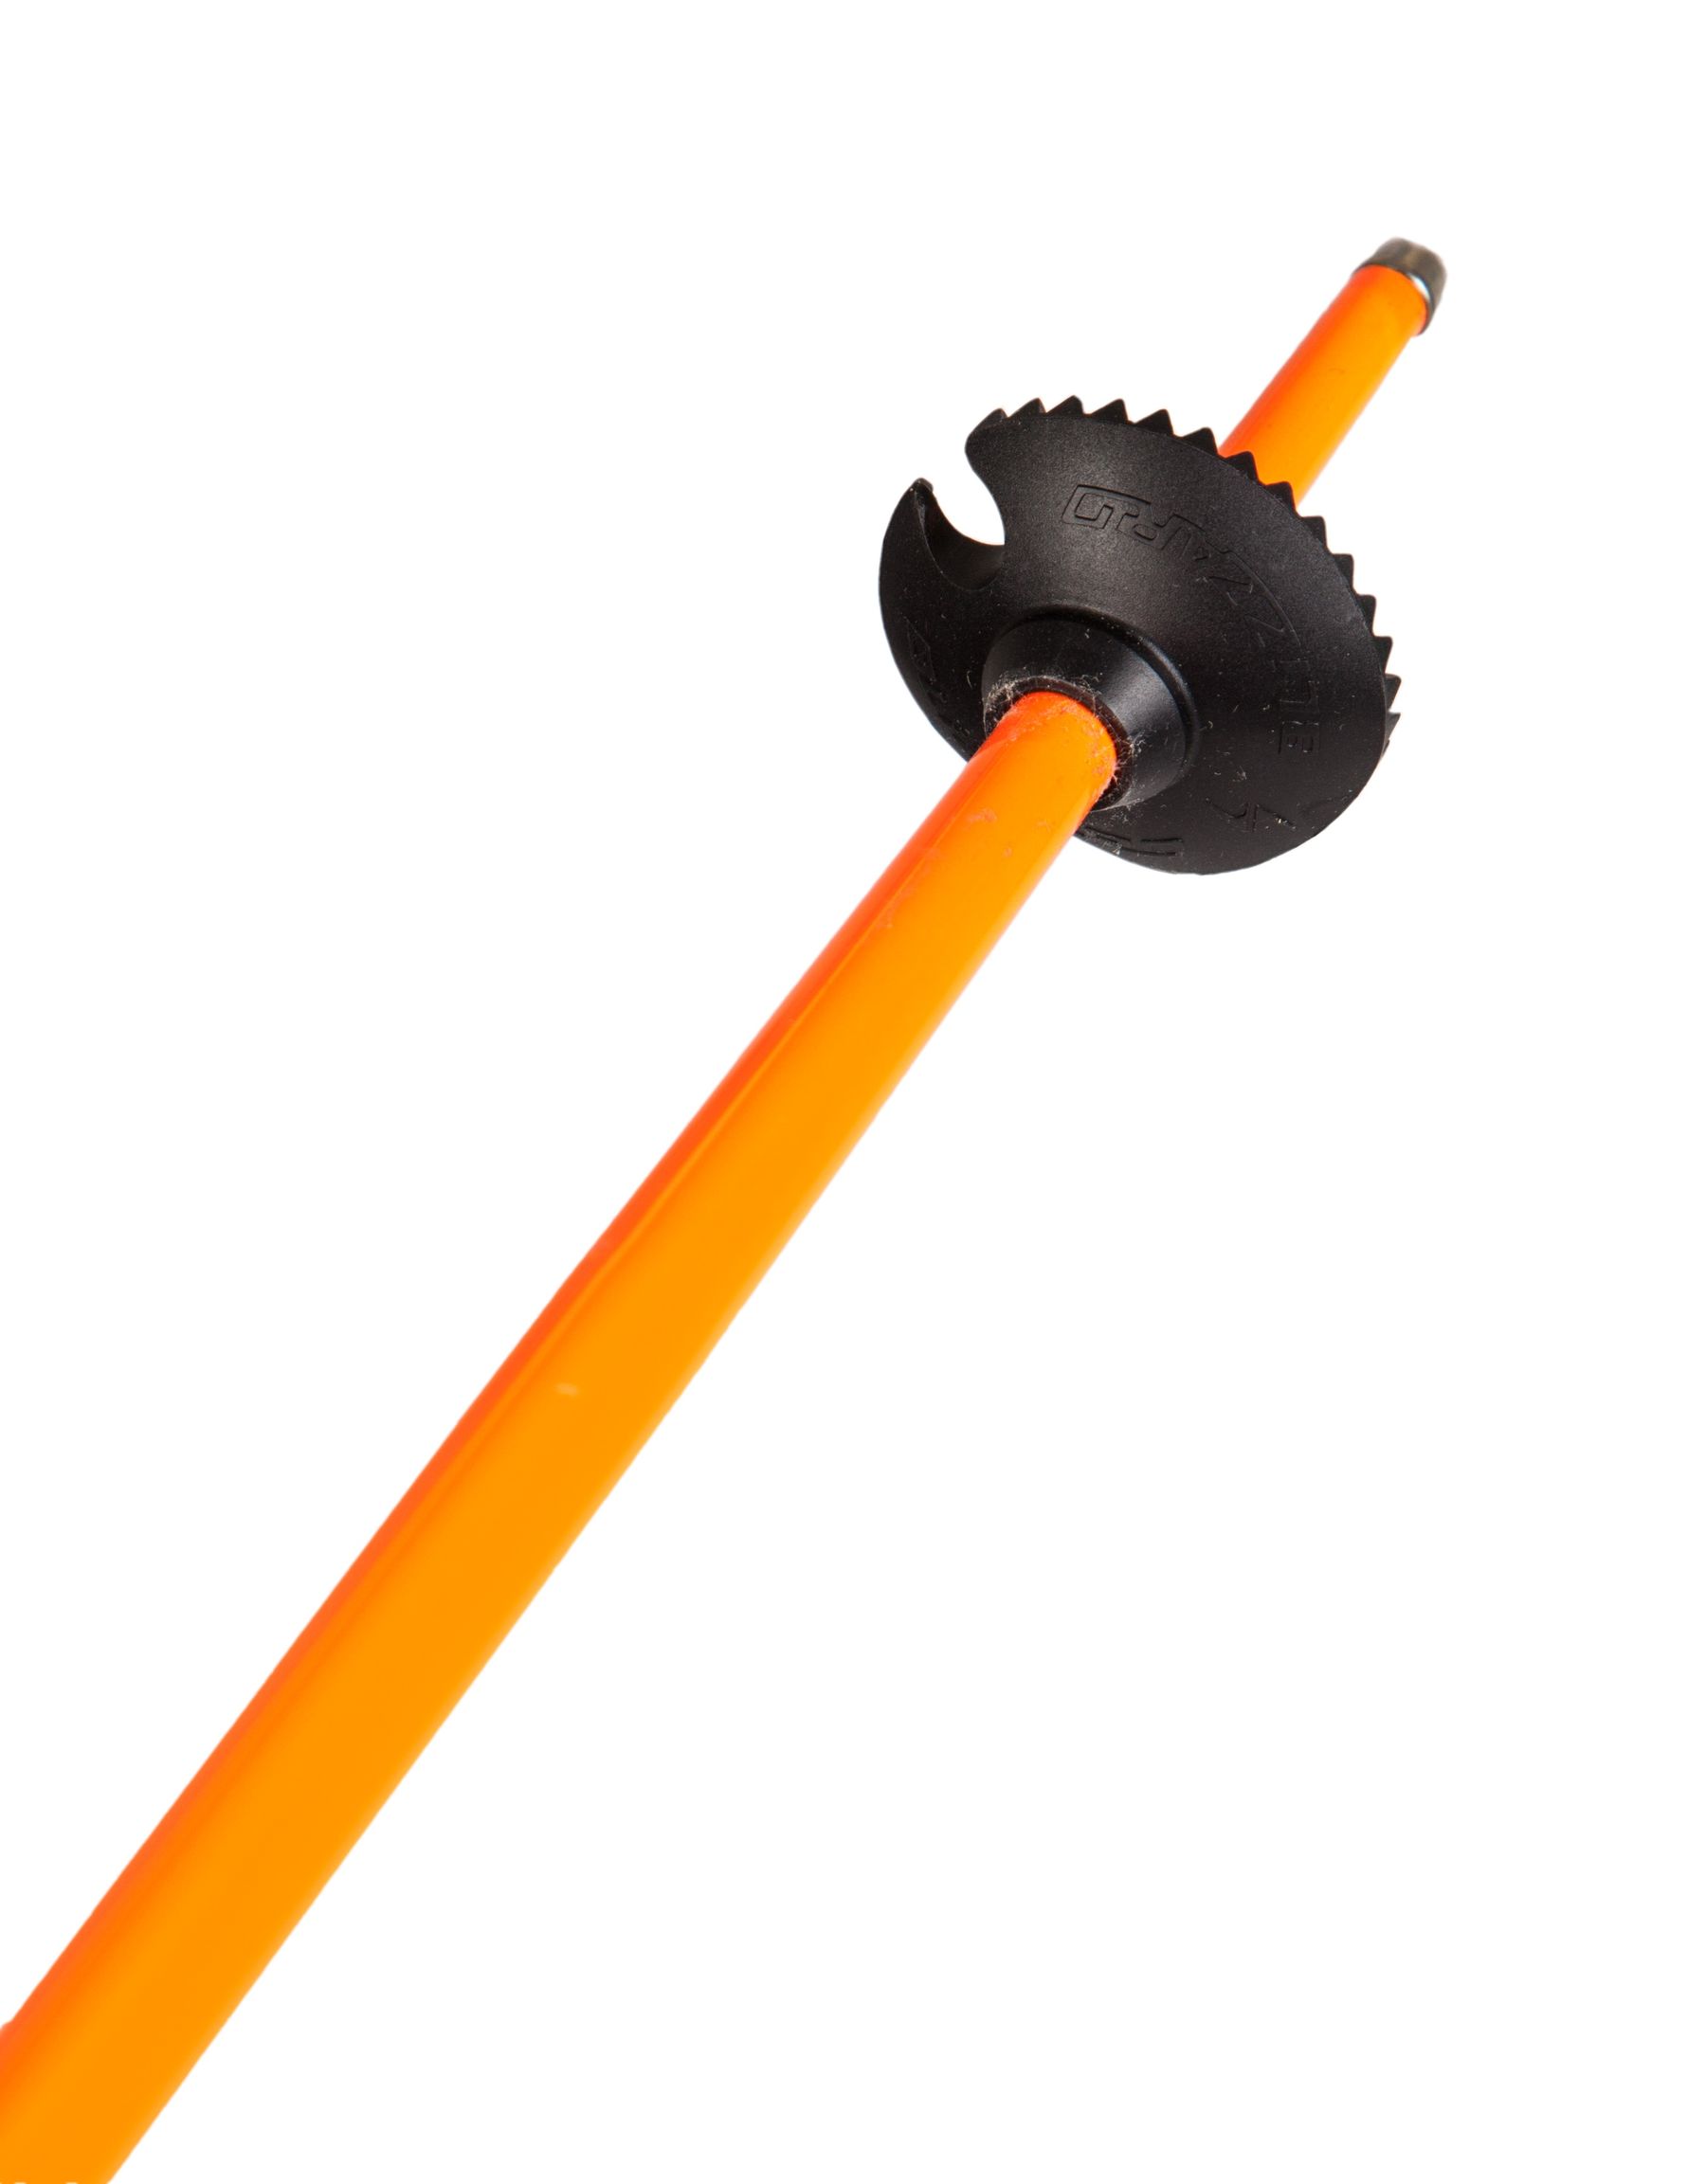 Race junior ski poles, orange/black